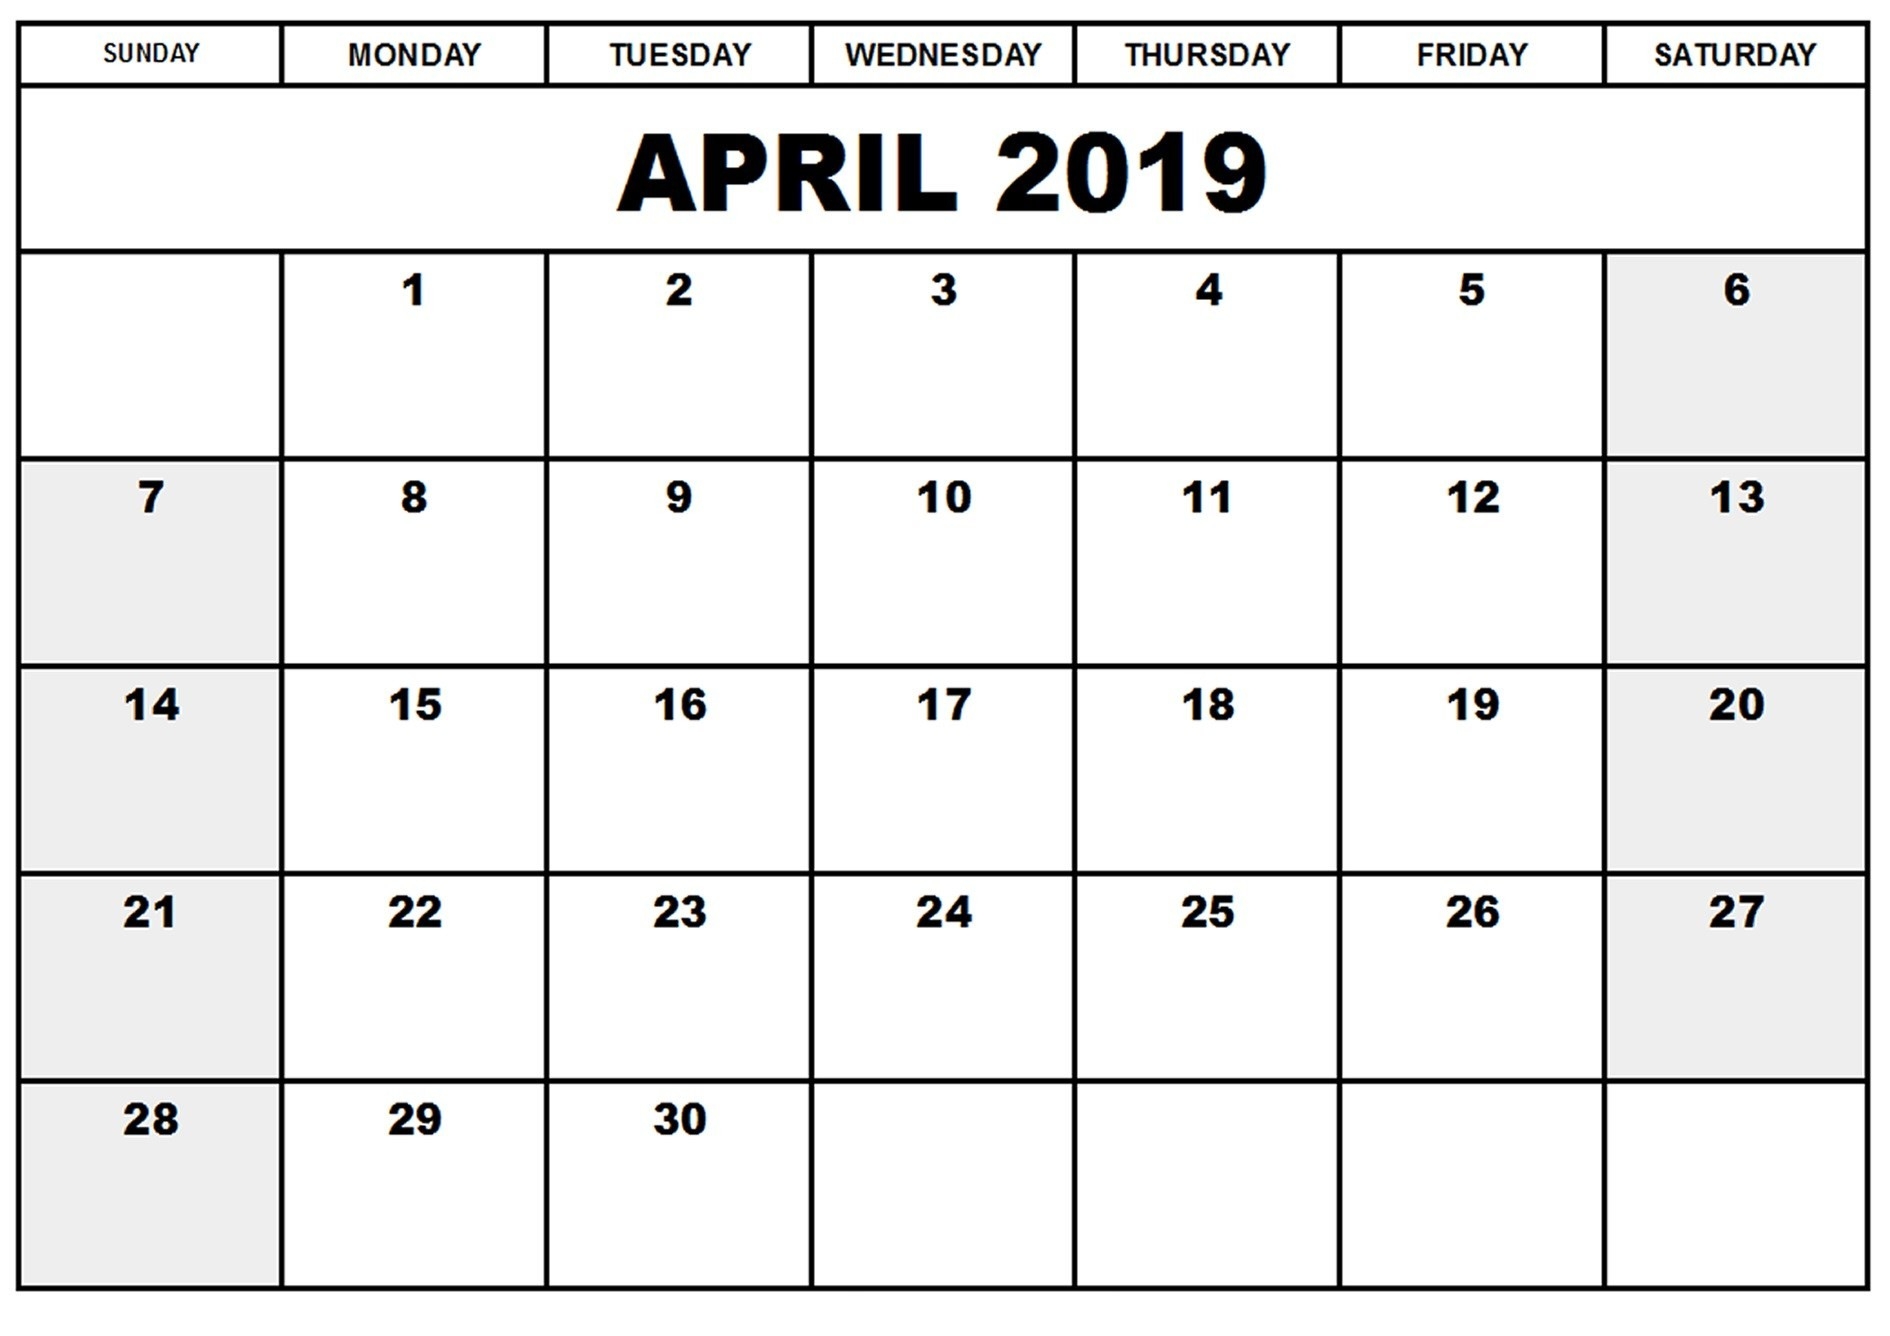 April 2019 Printable Calendar Templates - Free Blank-Blank Calendar With Lines Template